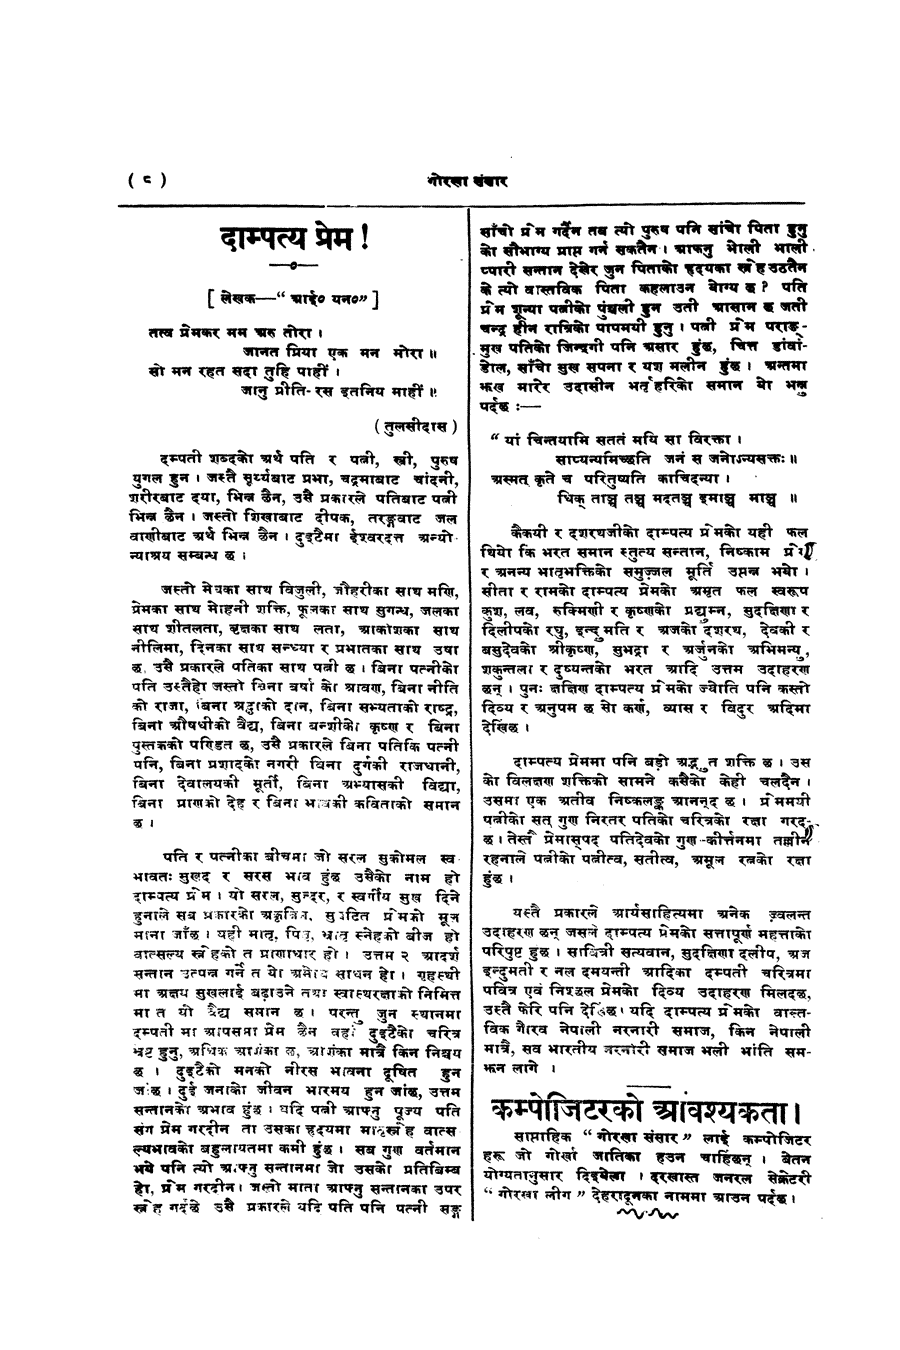 Gorkha Sansar, 29 Mar 1927, page 8